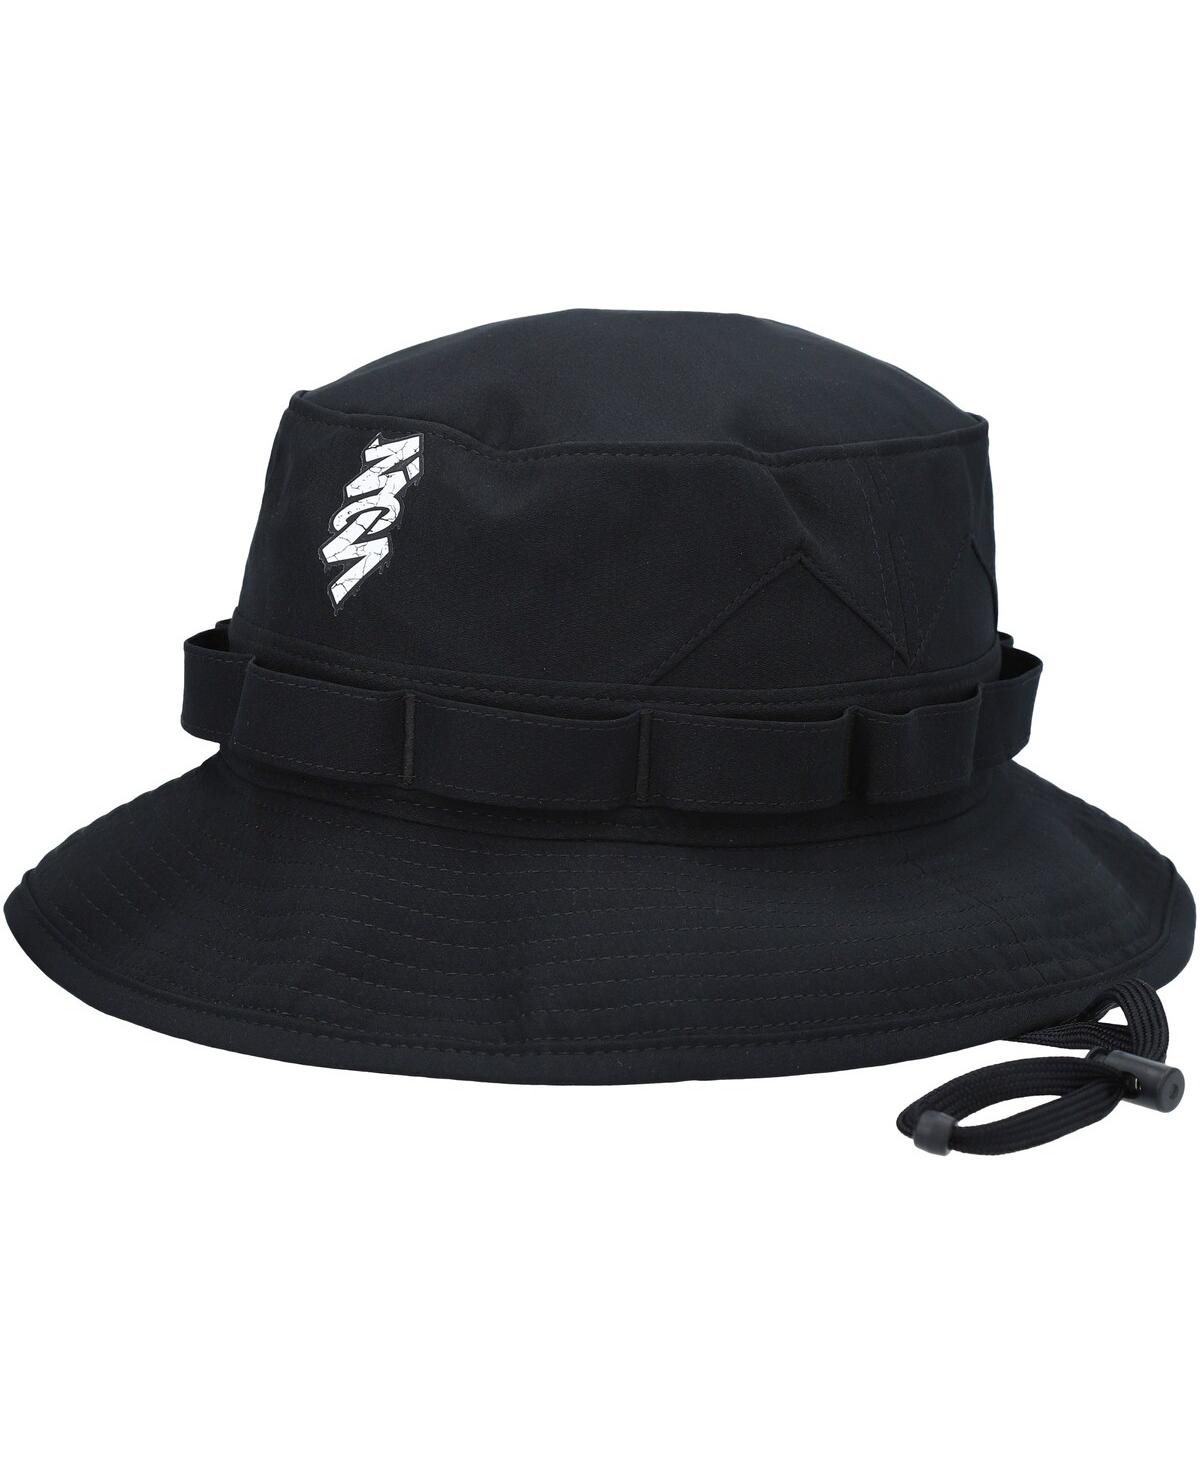 Men's Jordan Black Zion Bucket Hat - Black